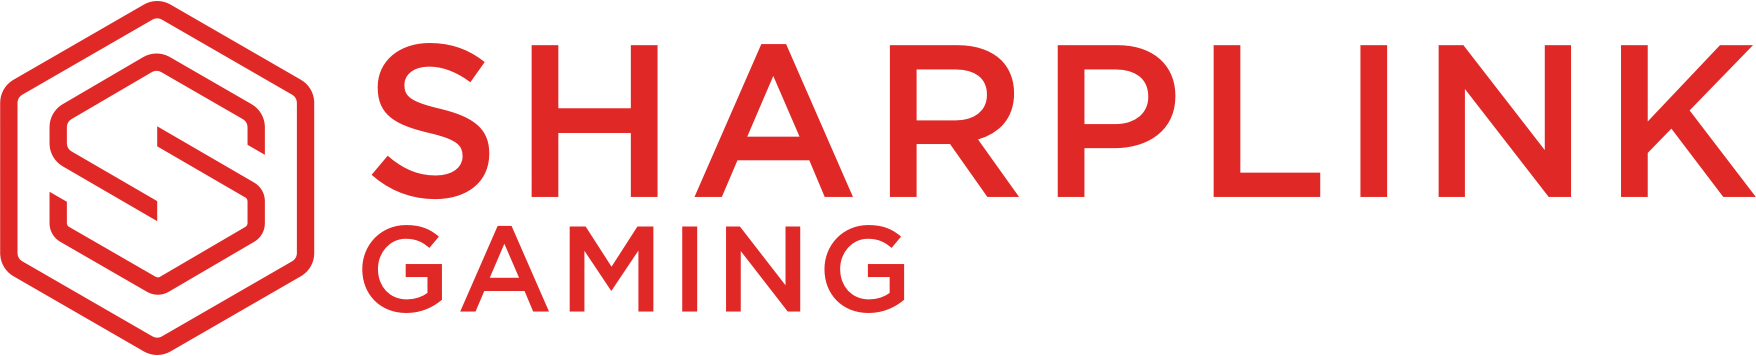 SharpLink Gaming Ltd., Tuesday, November 8, 2022, Press release picture